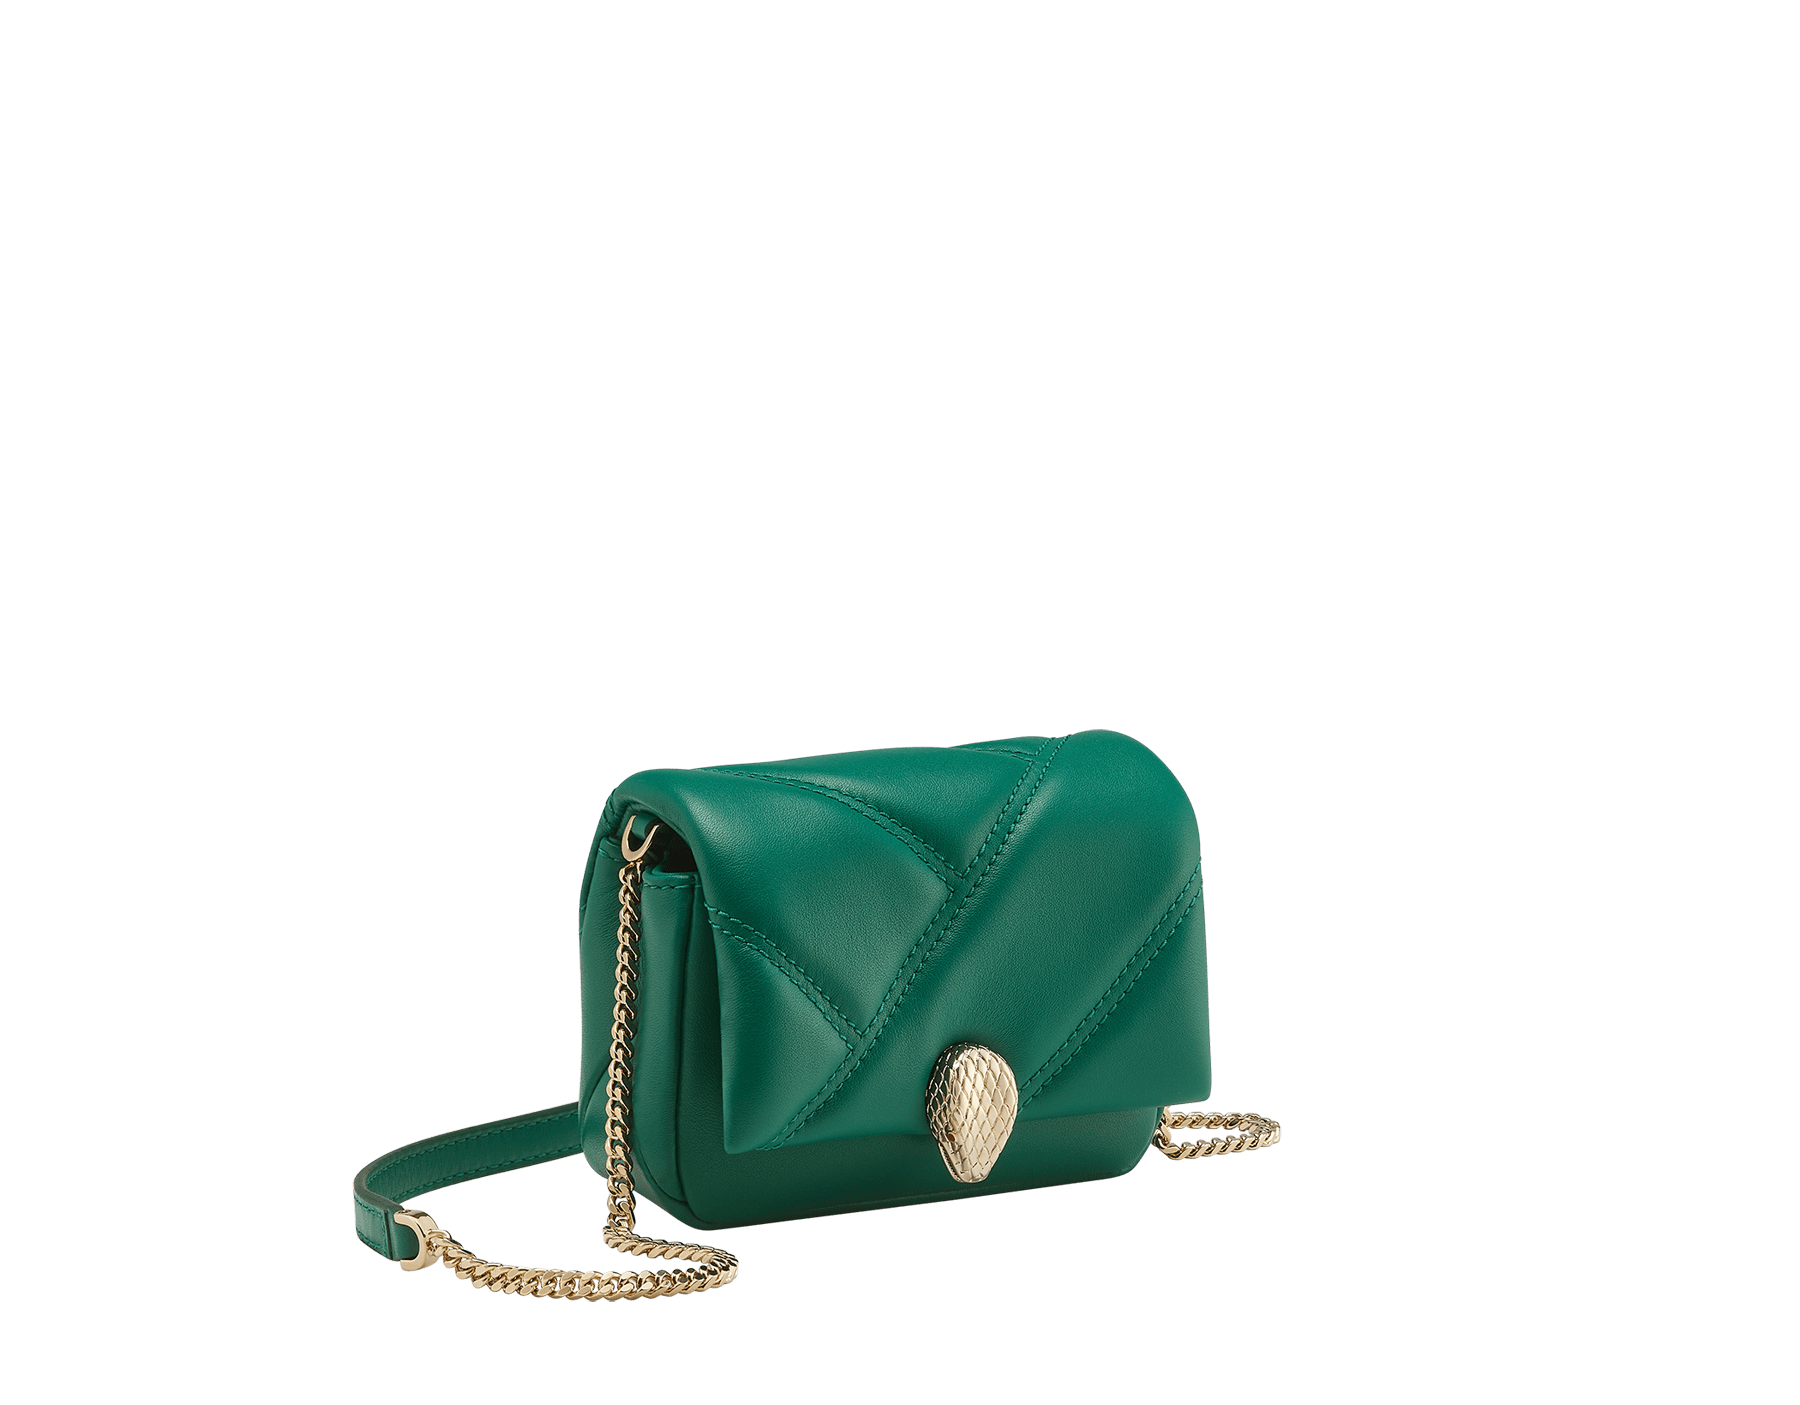 Bulgari Serpenti Cabochon Micro Bag in Green, Calf Leather, Xxs